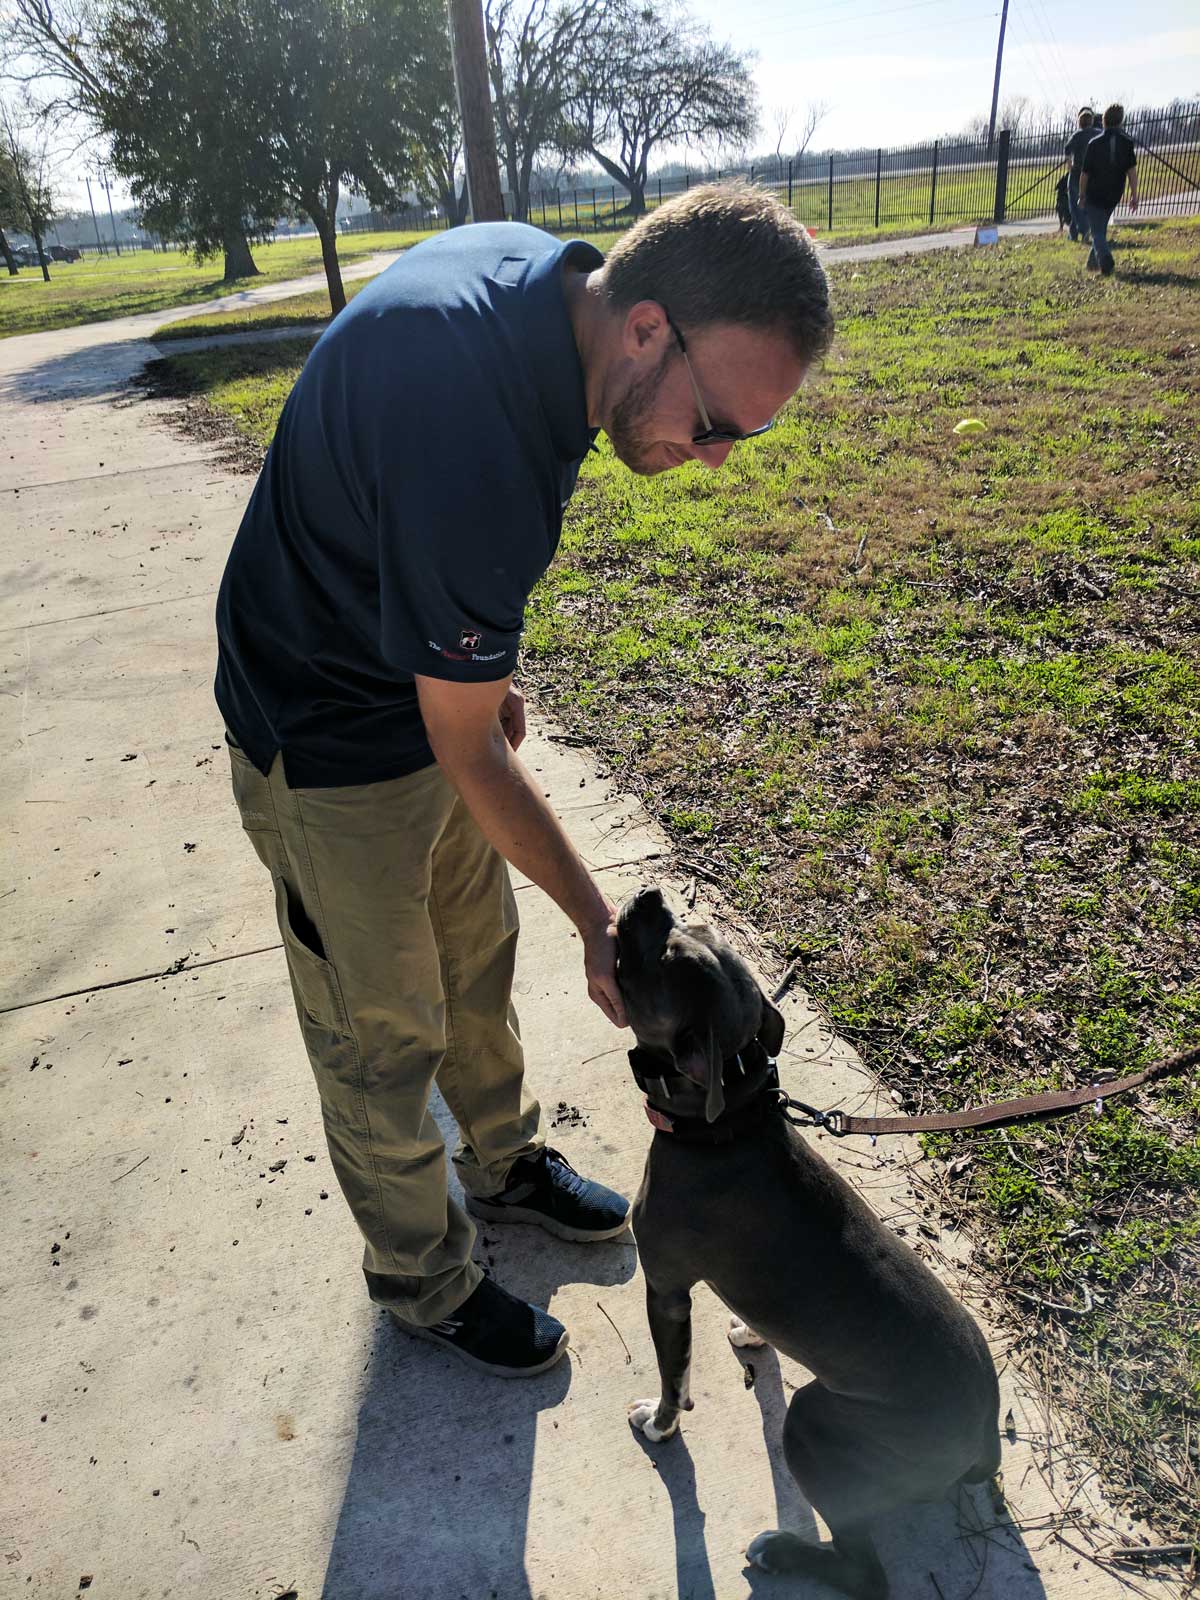 Dog Training Elite offers expert aggressive dog training programs near you in Savannah.